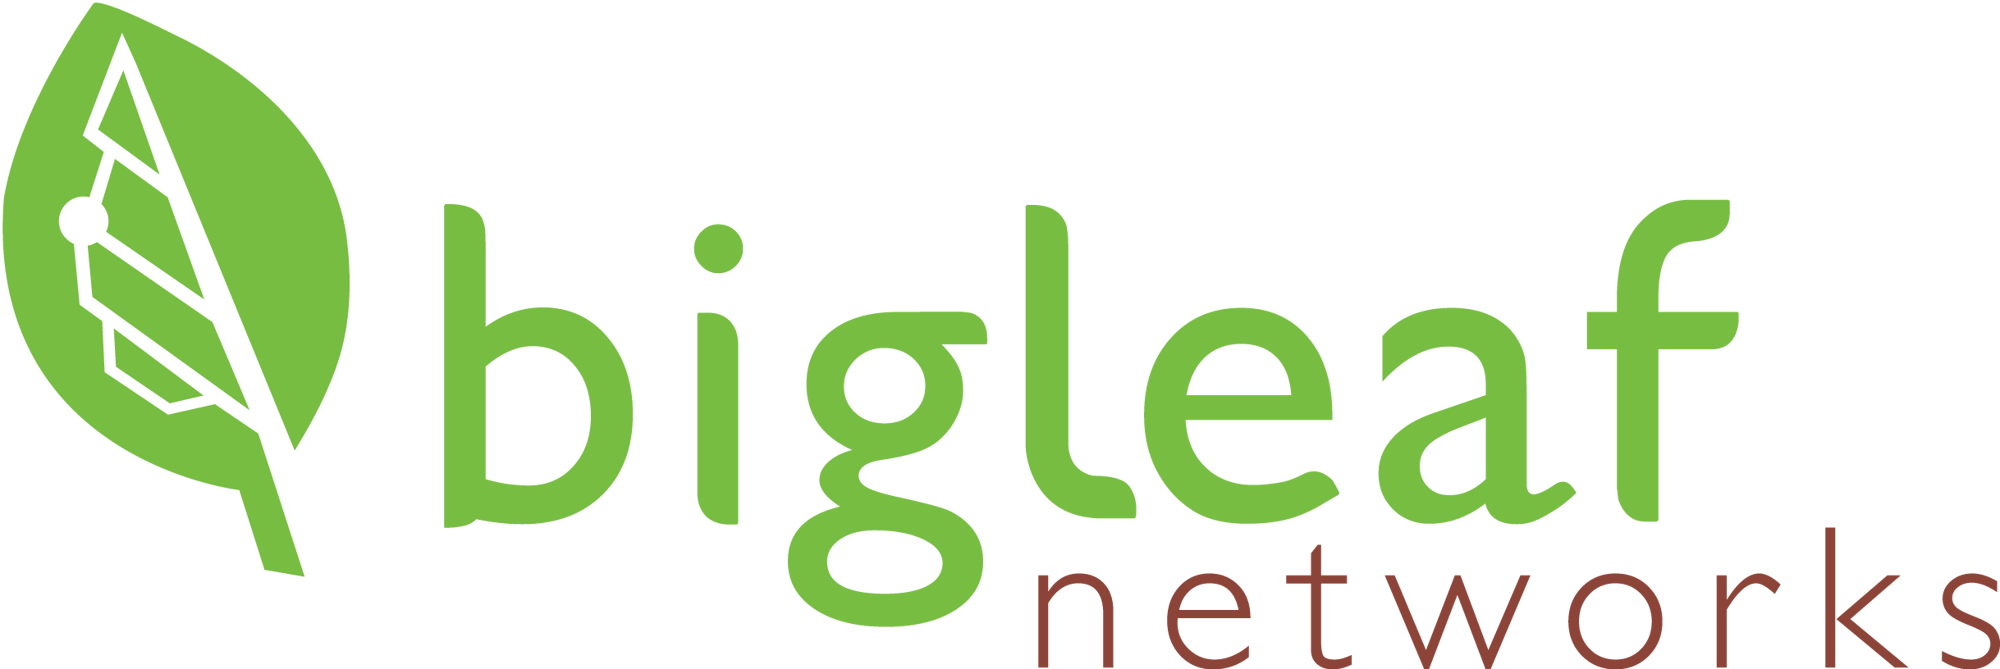 Bigleaf Logo - LARGE